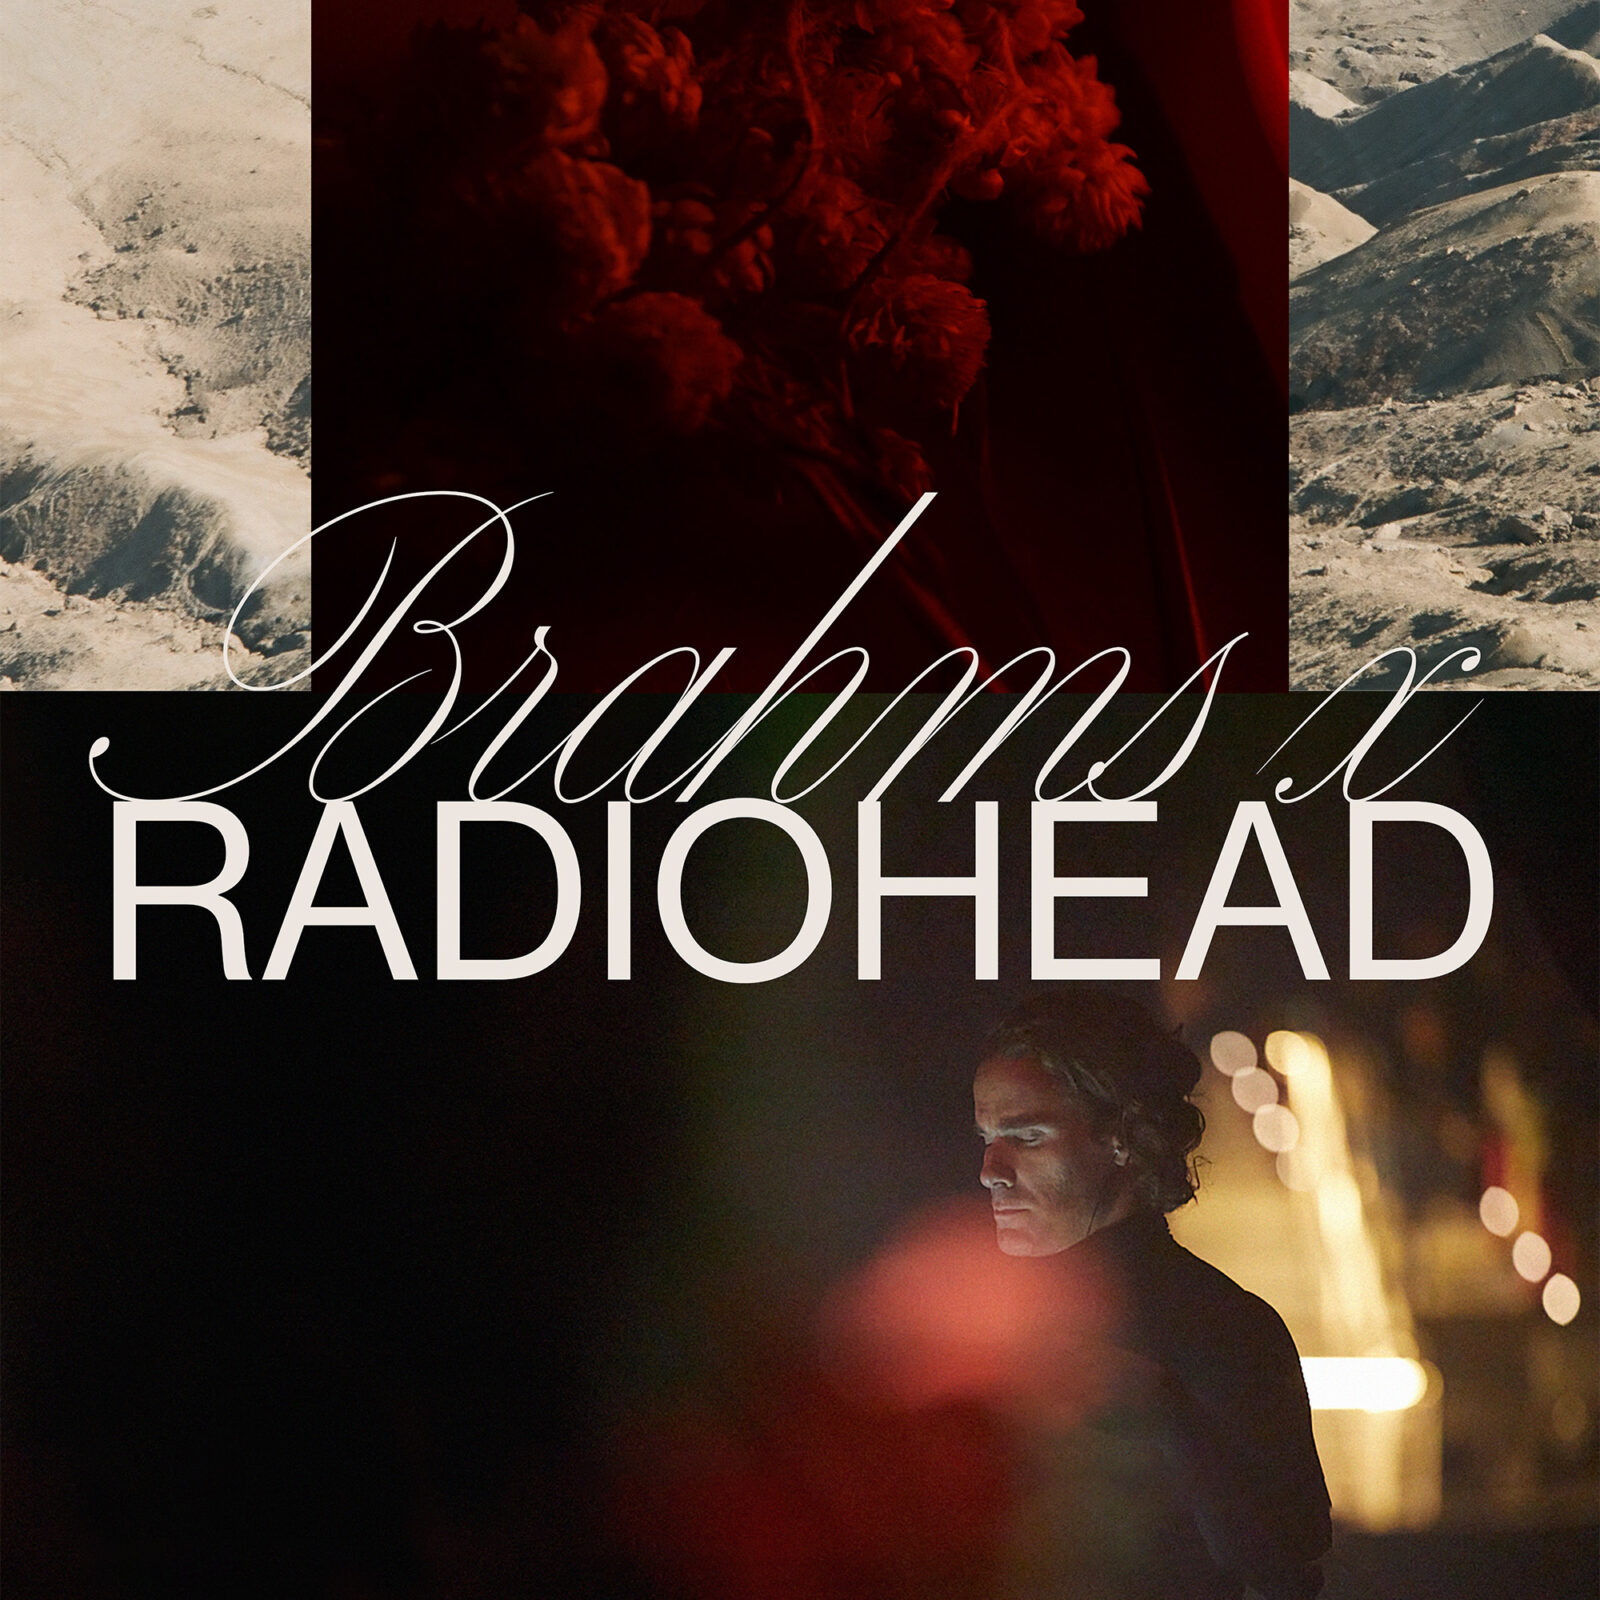 Brahms X Radiohead